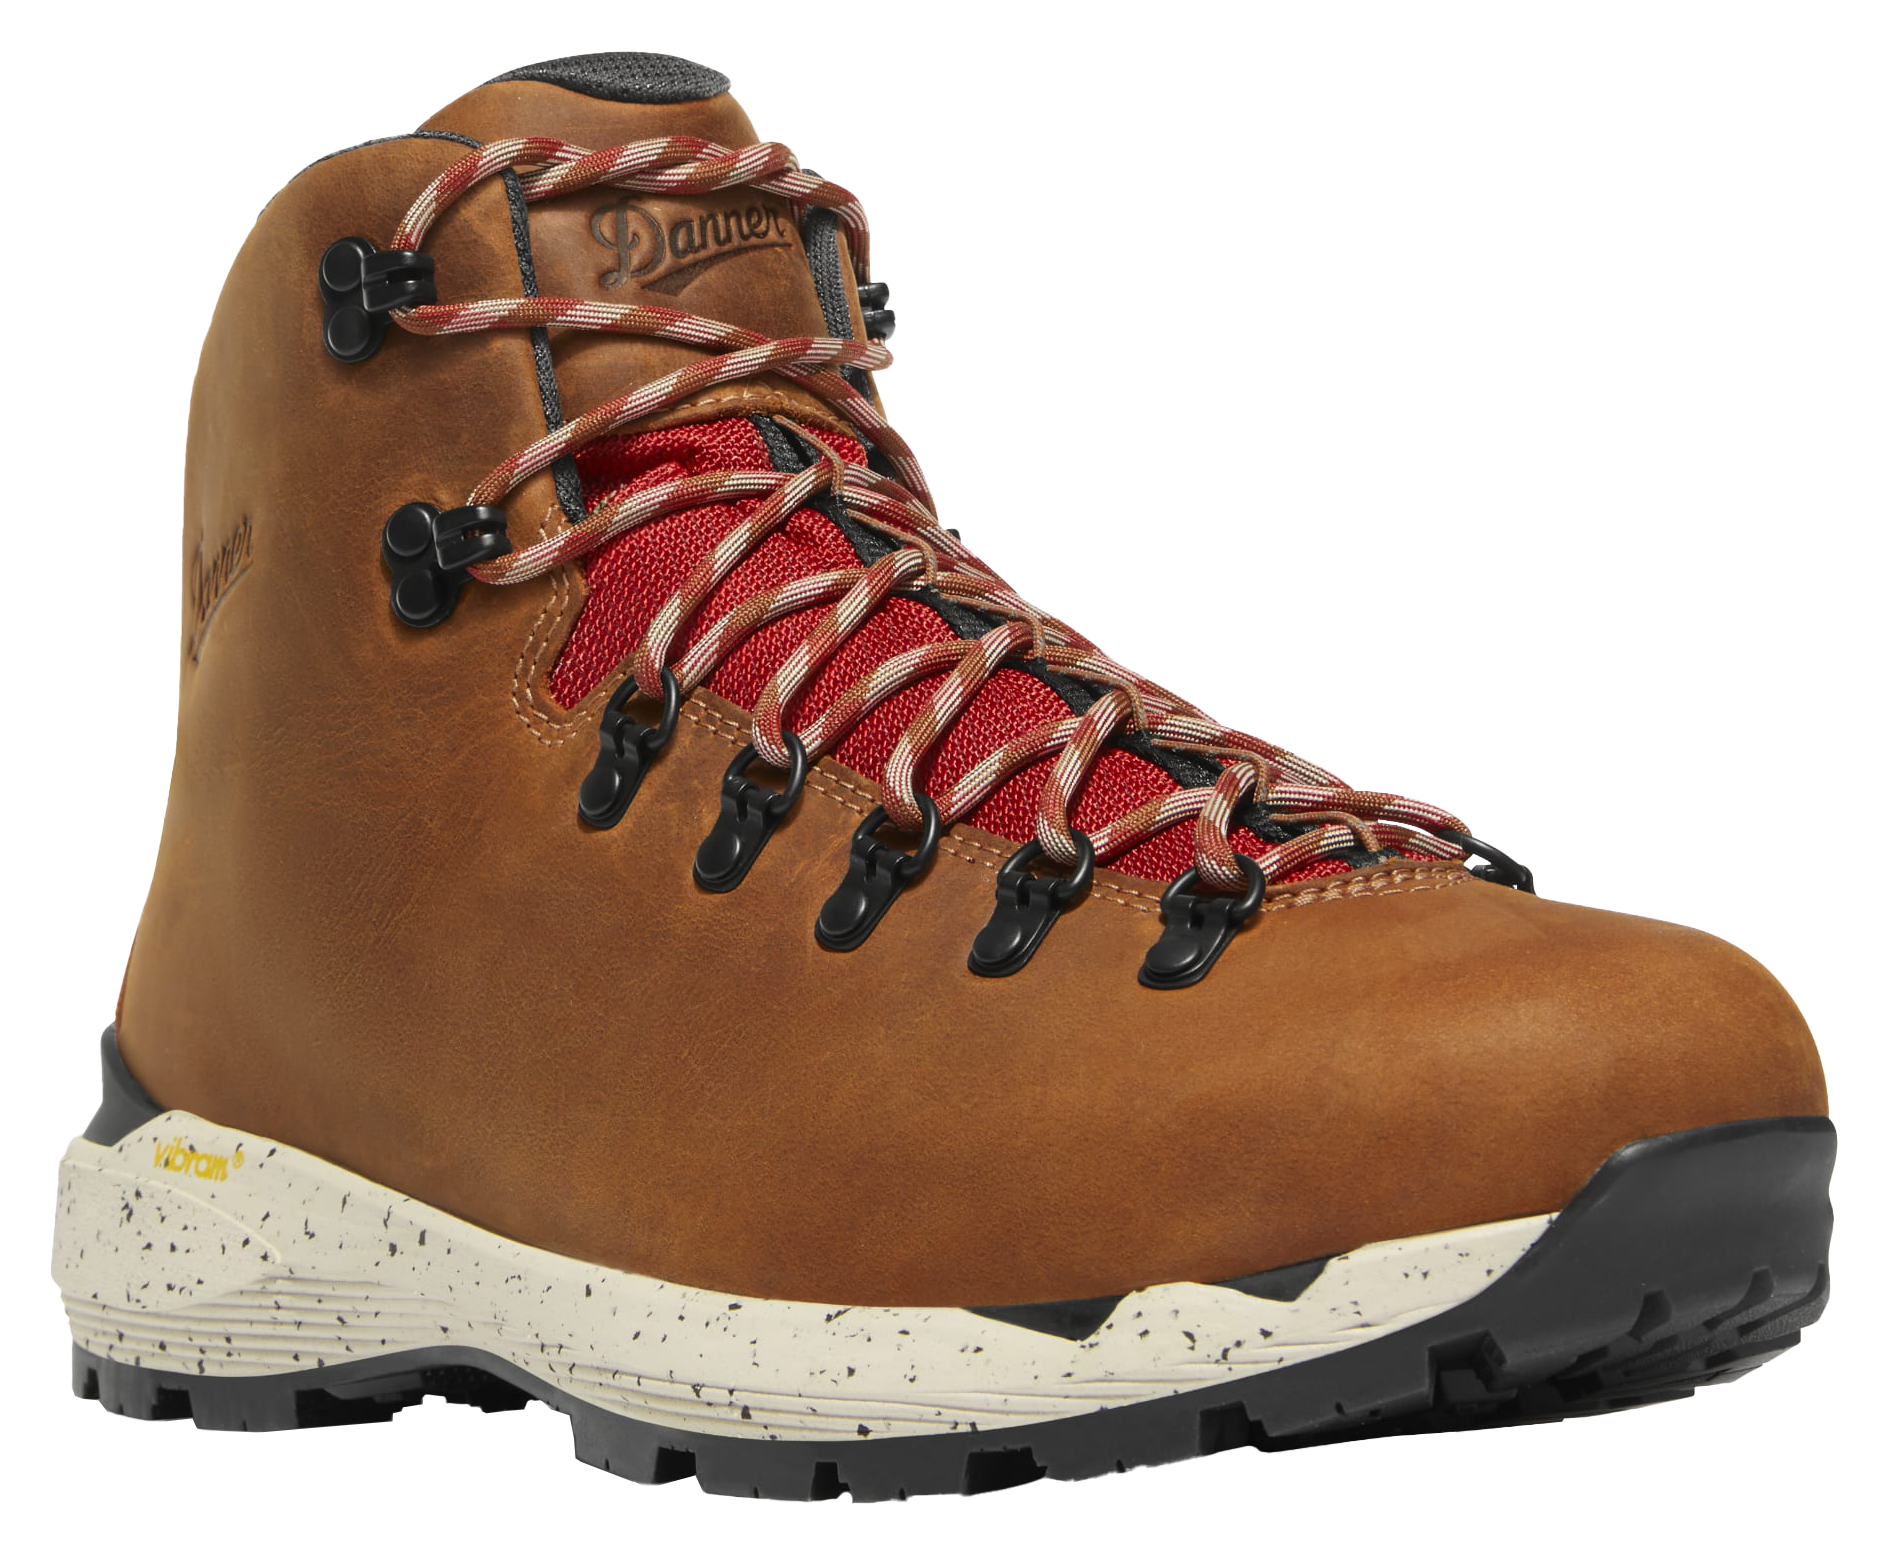 Danner Mountain 600 Evo GORE-TEX Hiking Boots for Men | Bass Pro Shops - Mocha Brown/Rhodo Red - 14M